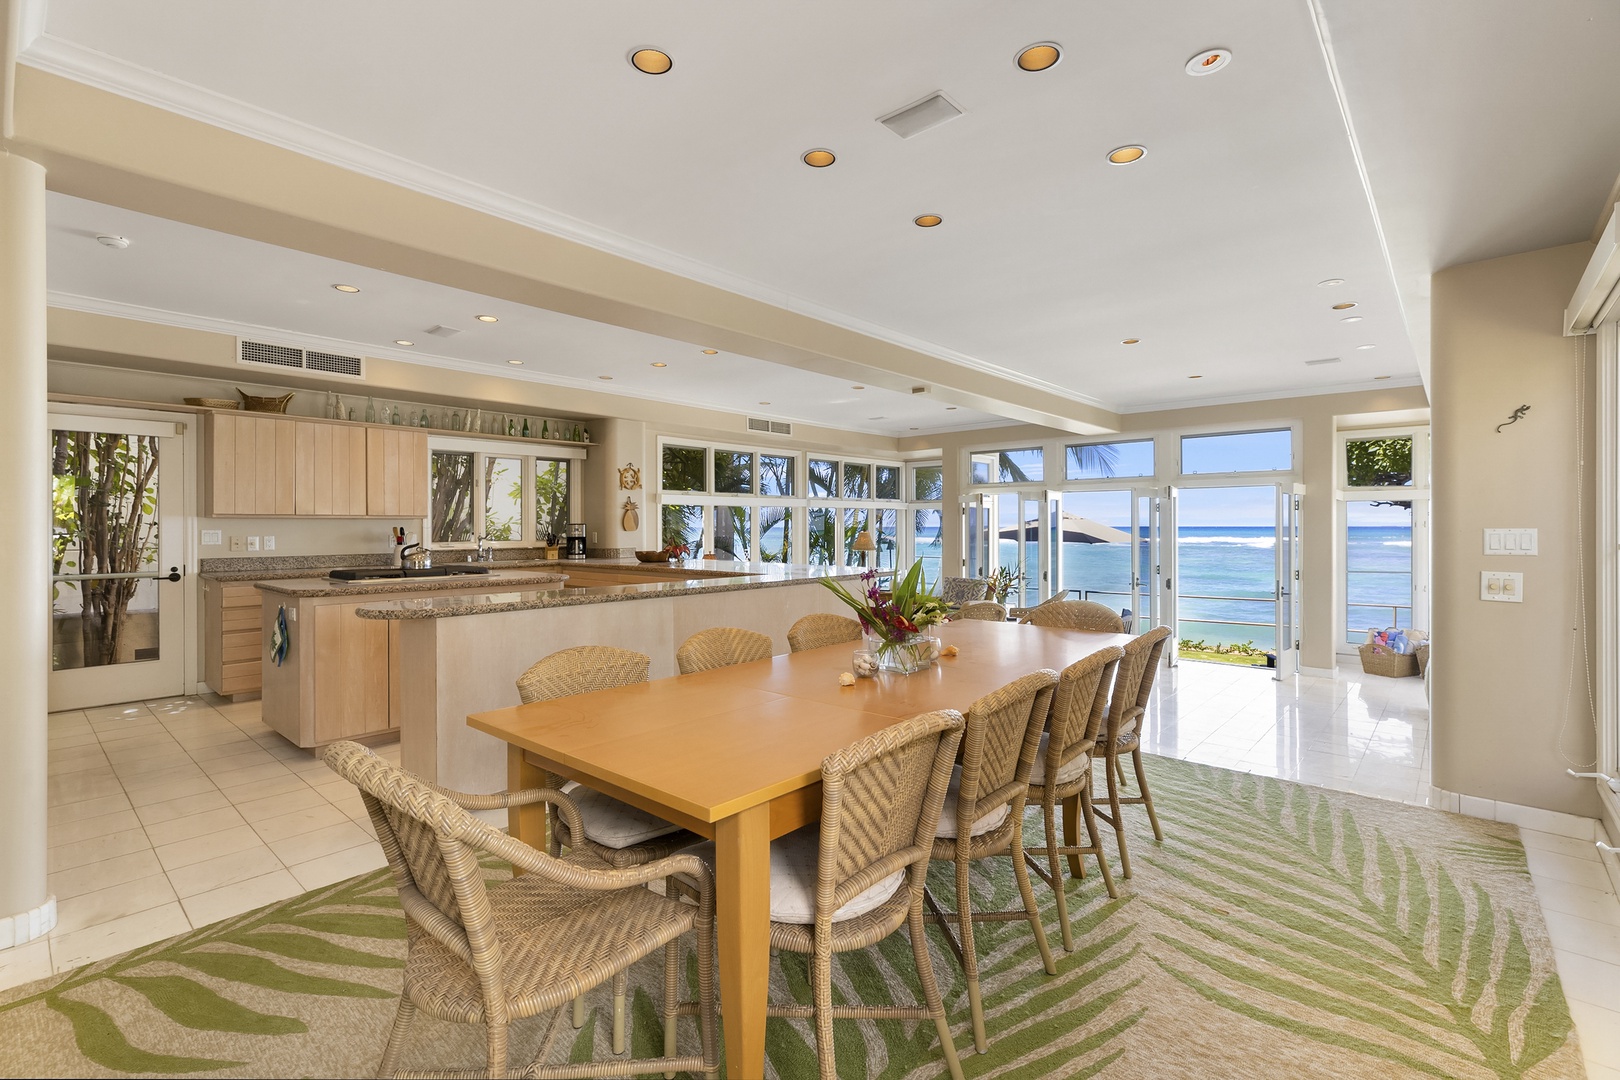 Honolulu Vacation Rentals, Diamond Head Surf House - Dining Room/Kitchen looking towards Oceanside lanai.